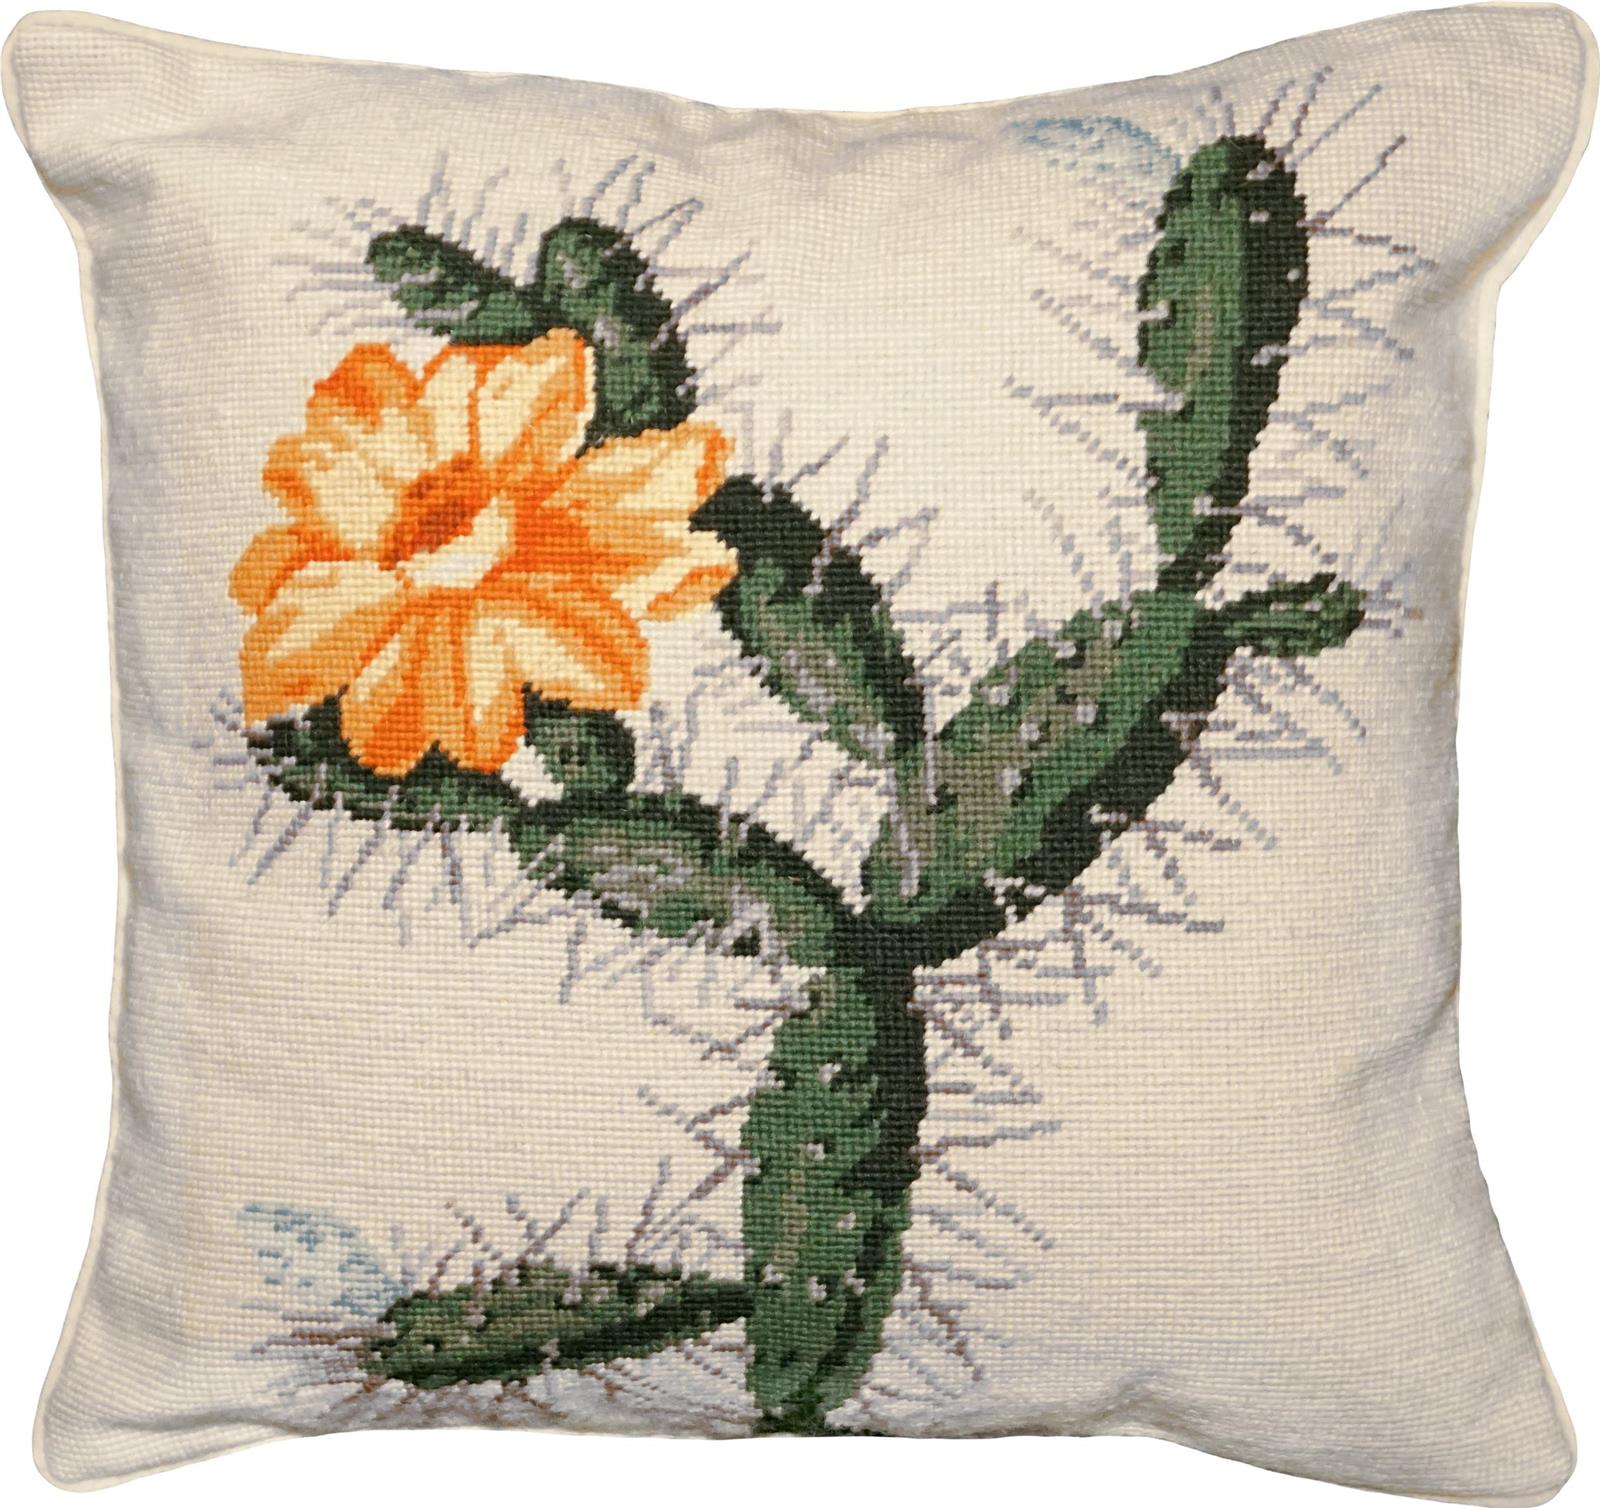 Throw Pillow Needlepoint Cactus 18x18 Yellow Down Insert Cotton Velvet Back-Image 1